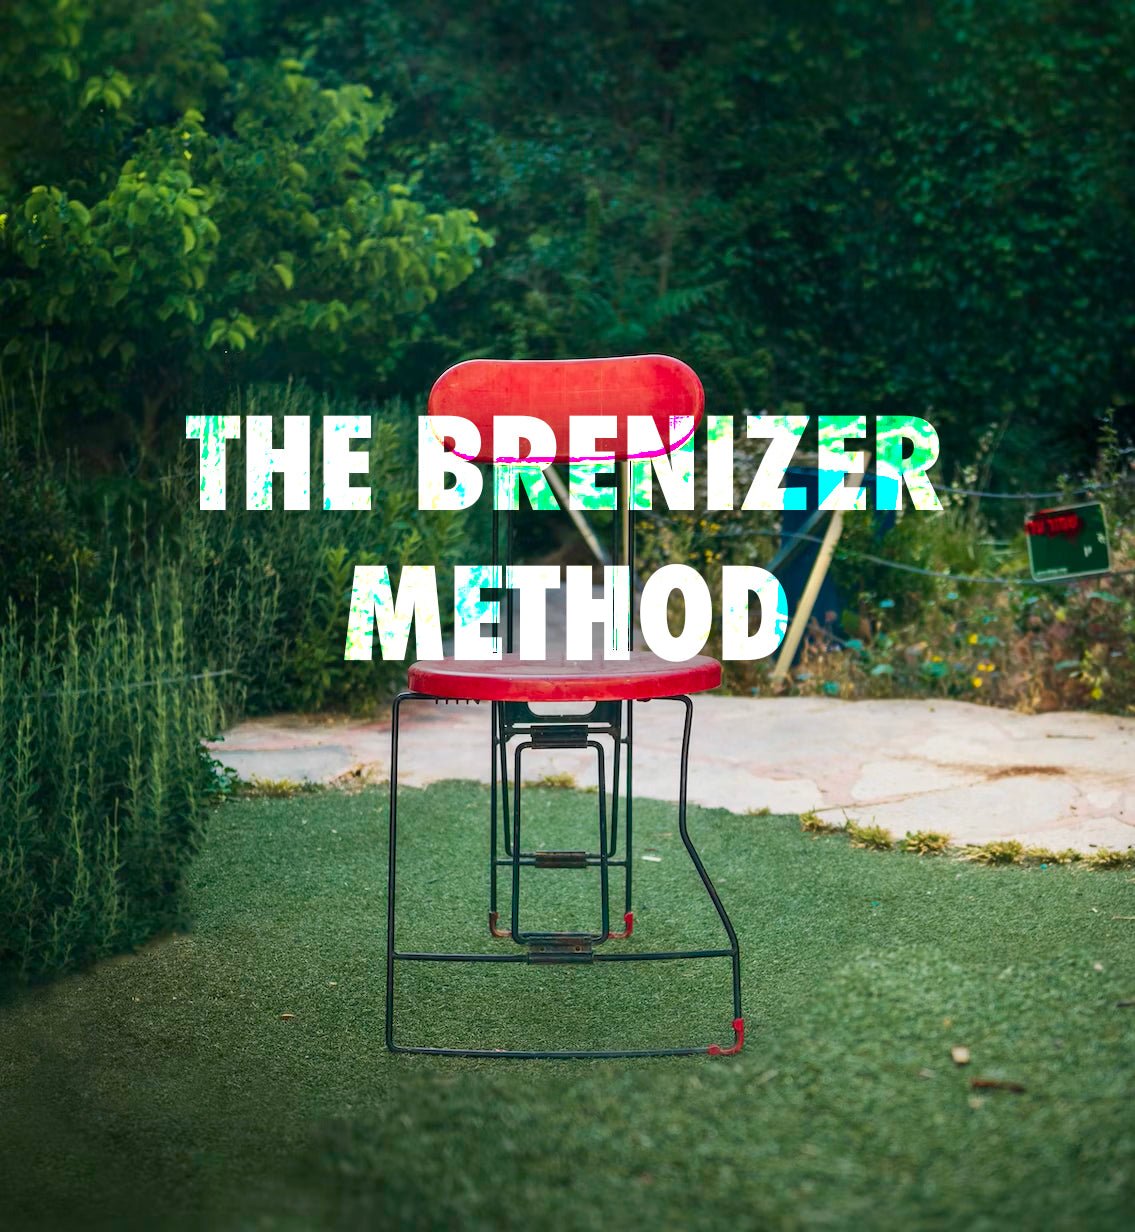 The Brenizer Method (Bokeh Panorama) - B&C Camera